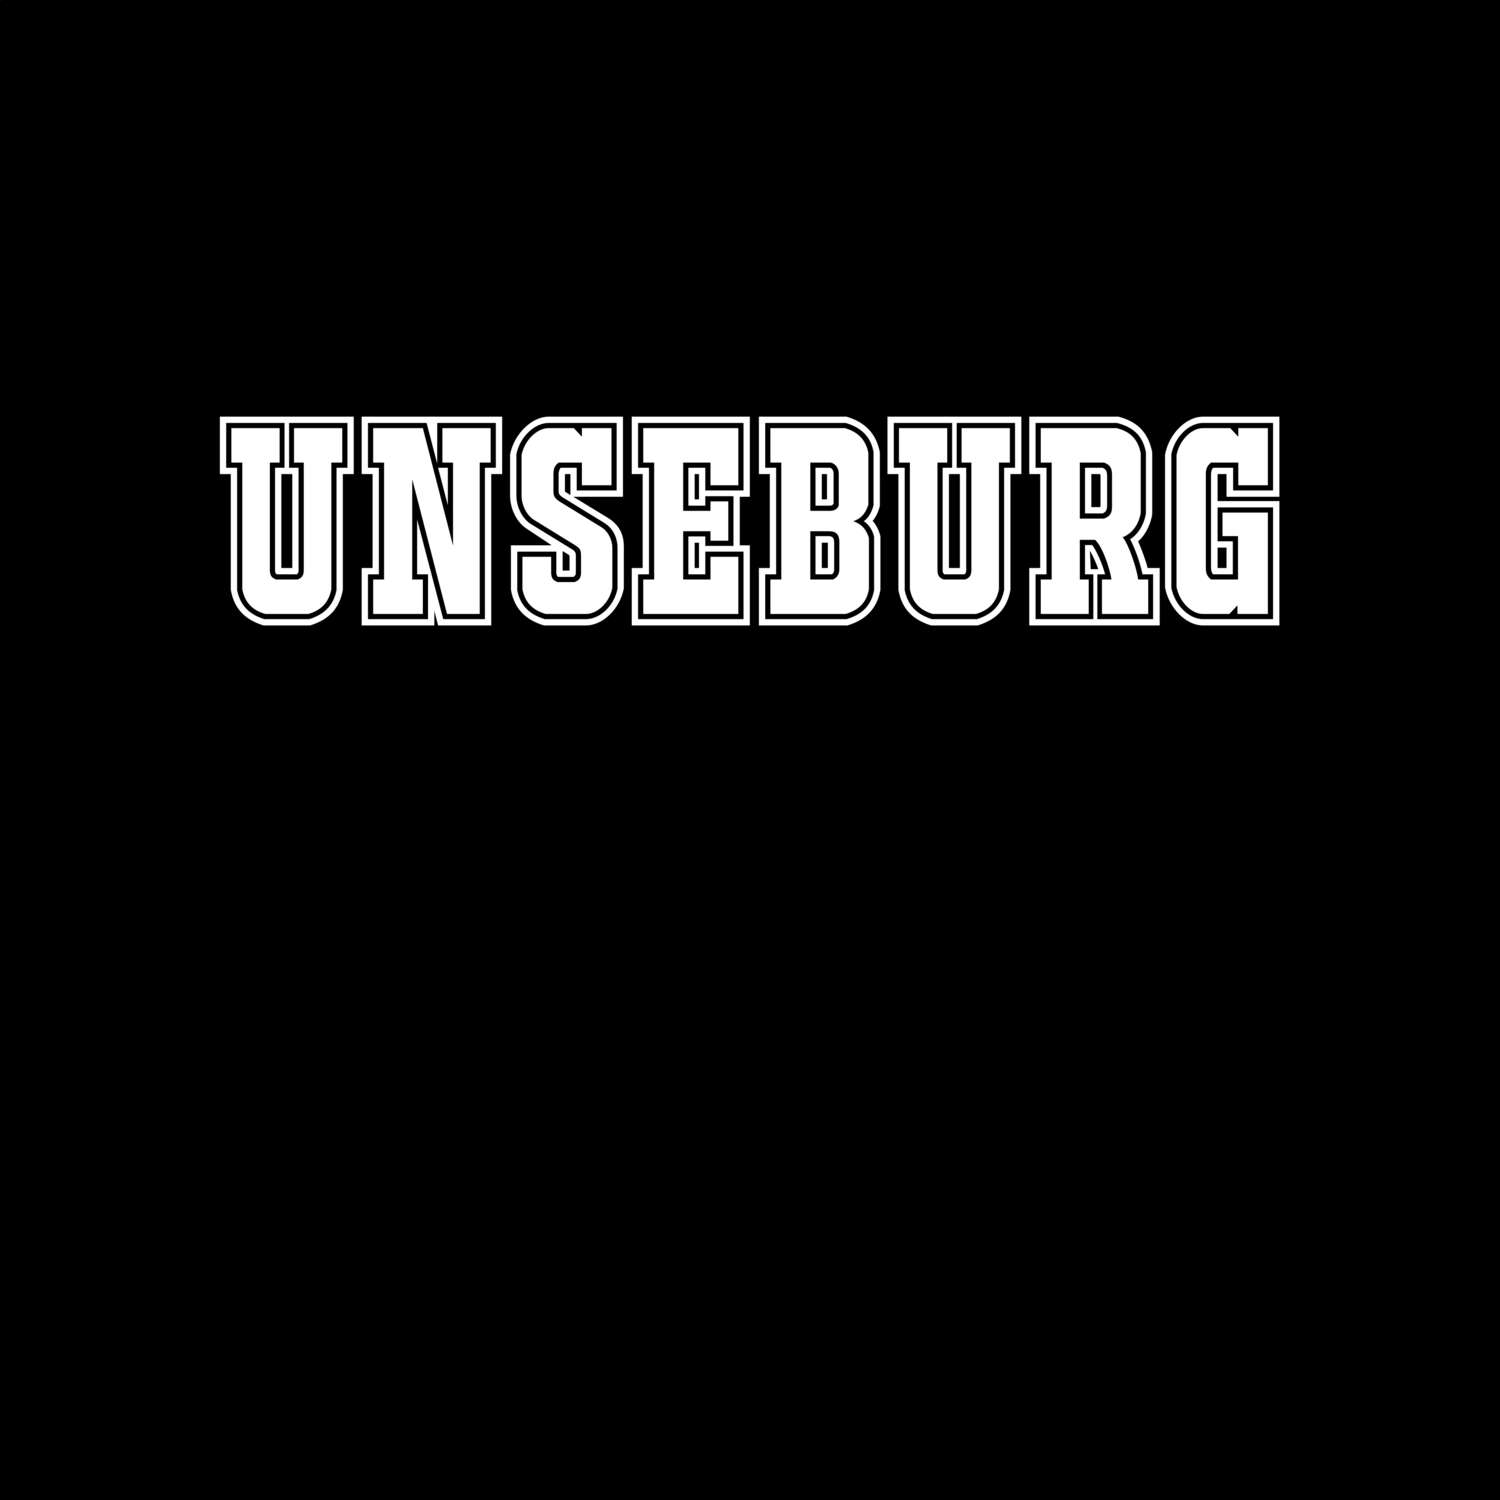 Unseburg T-Shirt »Classic«